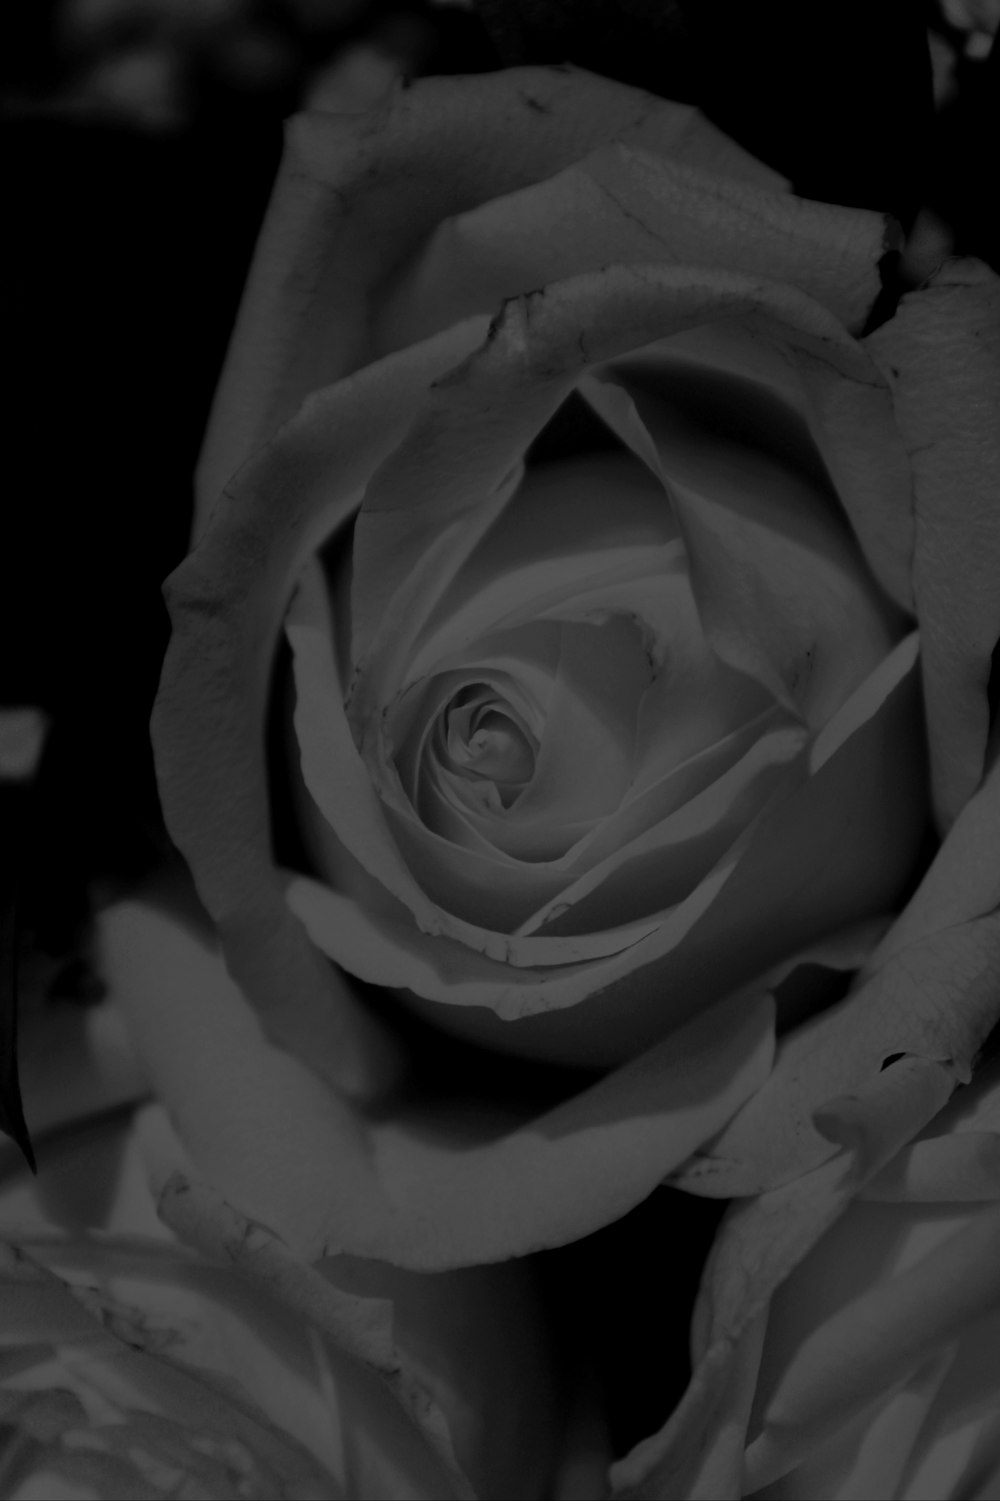 Una foto in bianco e nero di una rosa